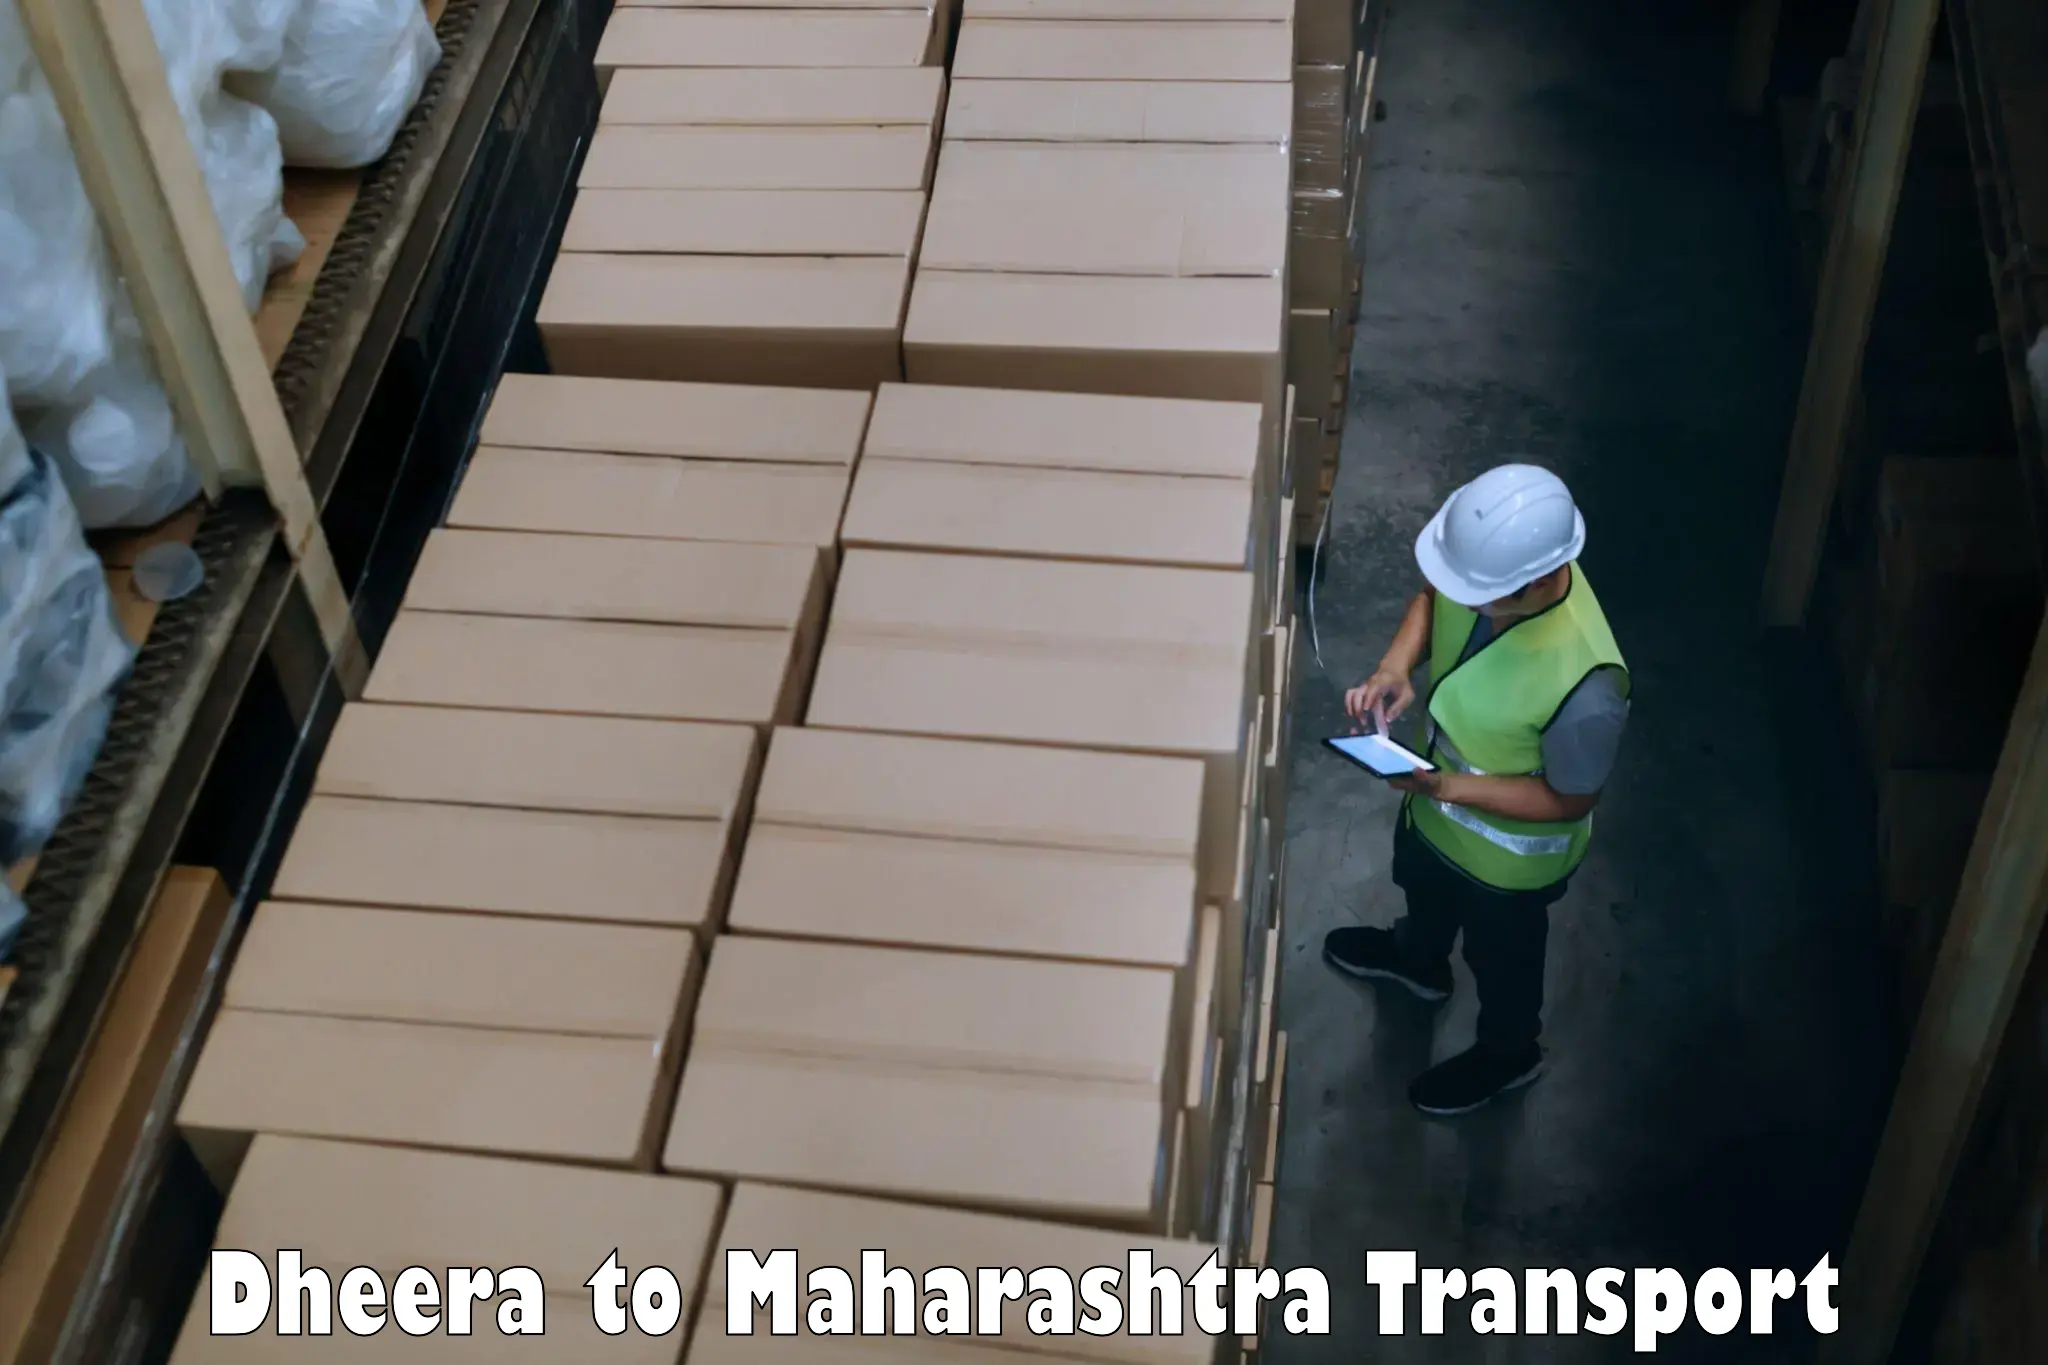 Daily transport service Dheera to Andheri